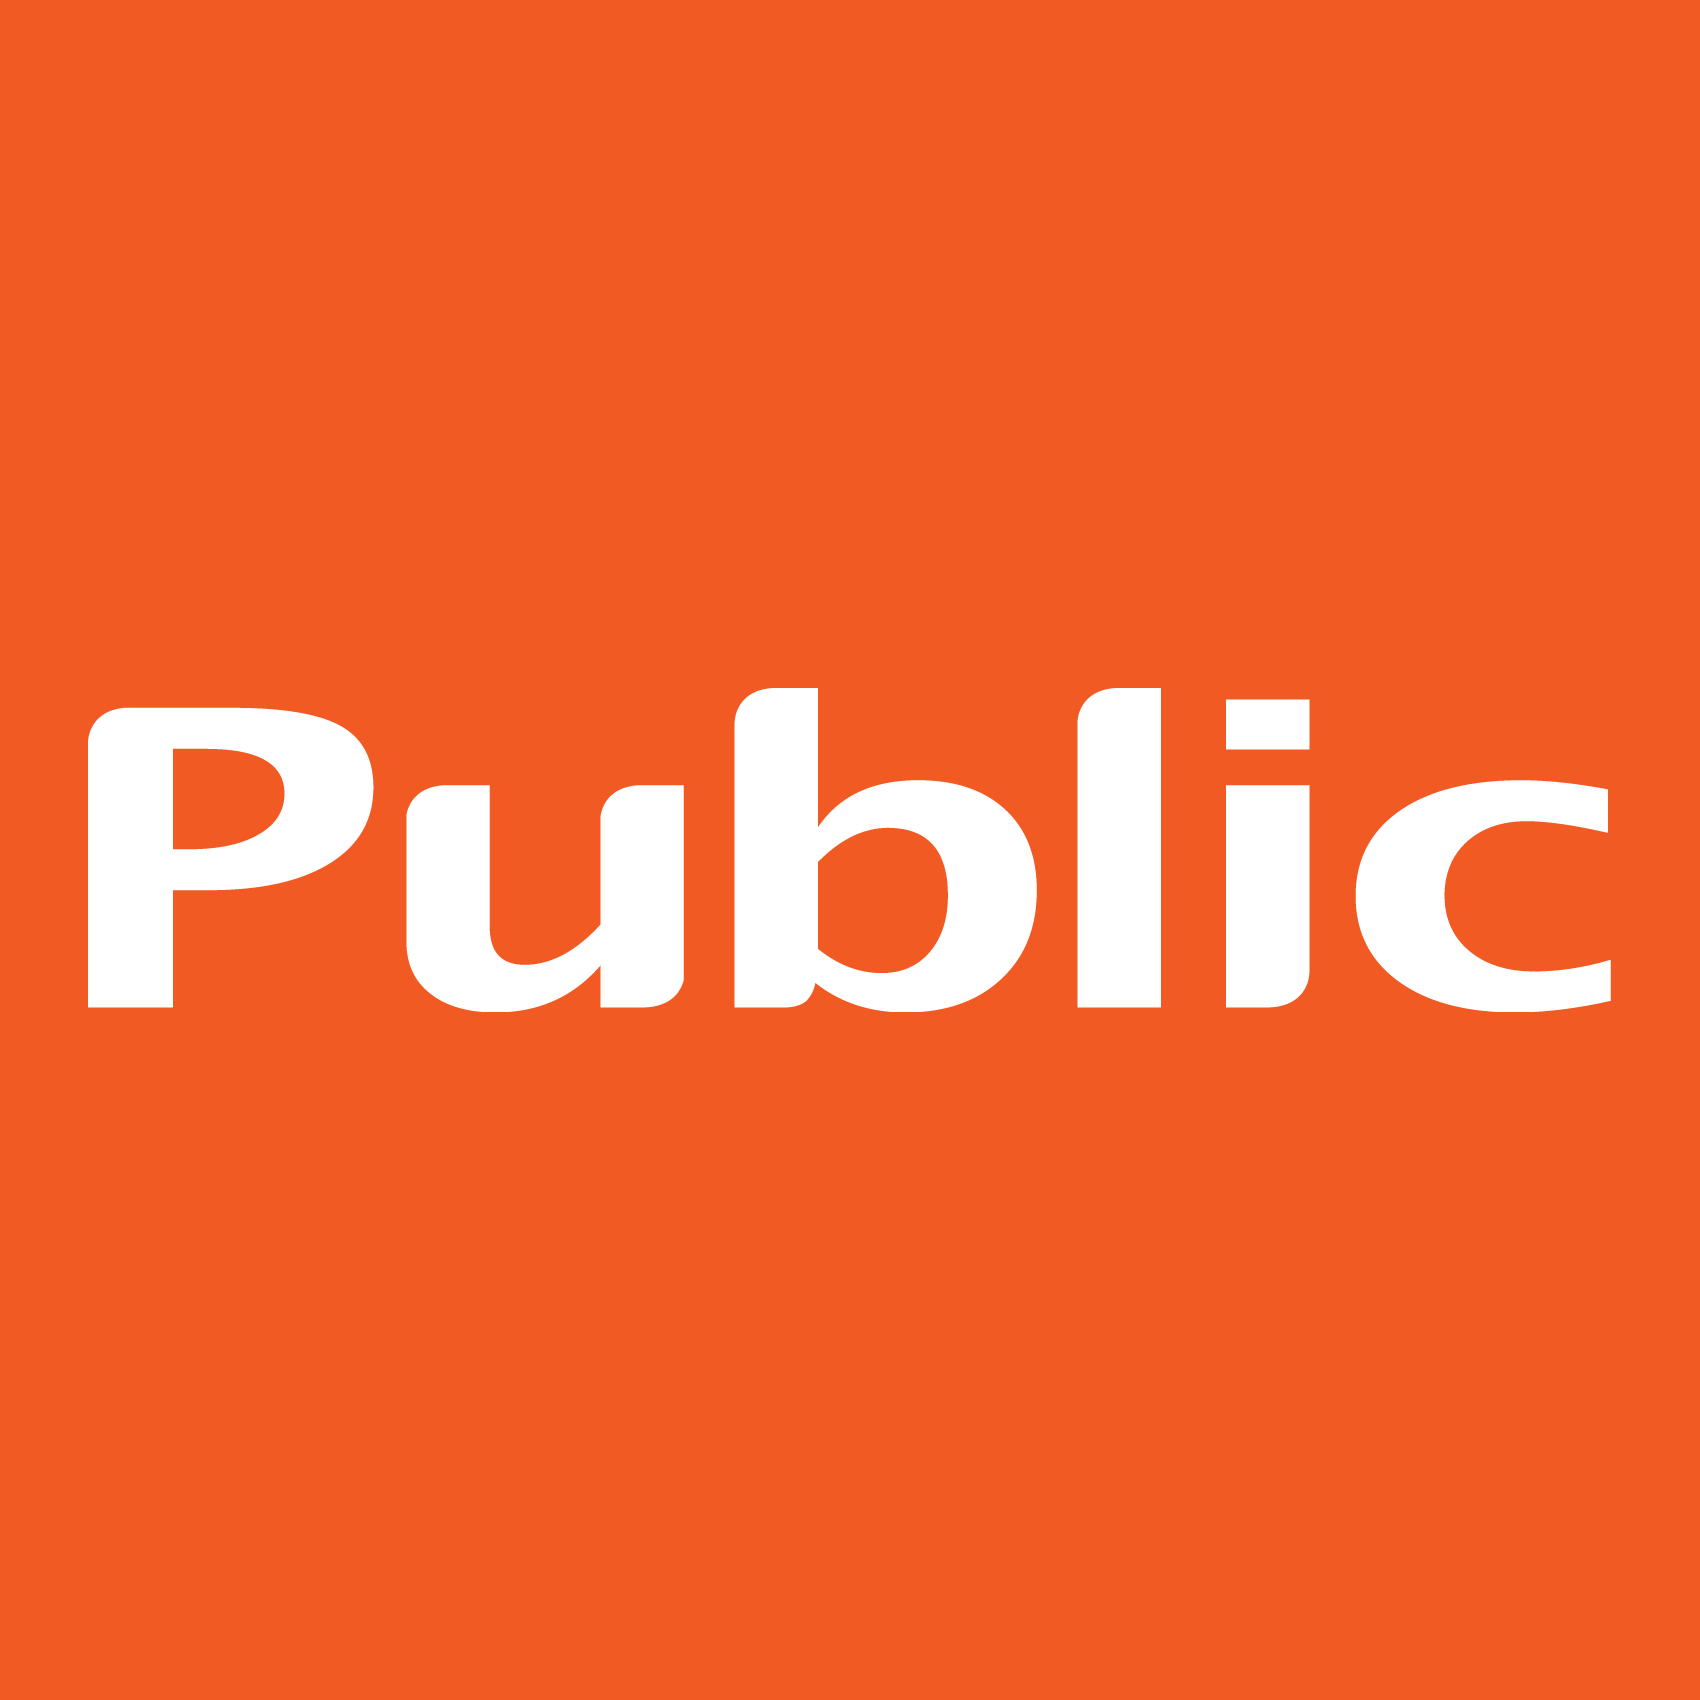 Public Logo - public logo